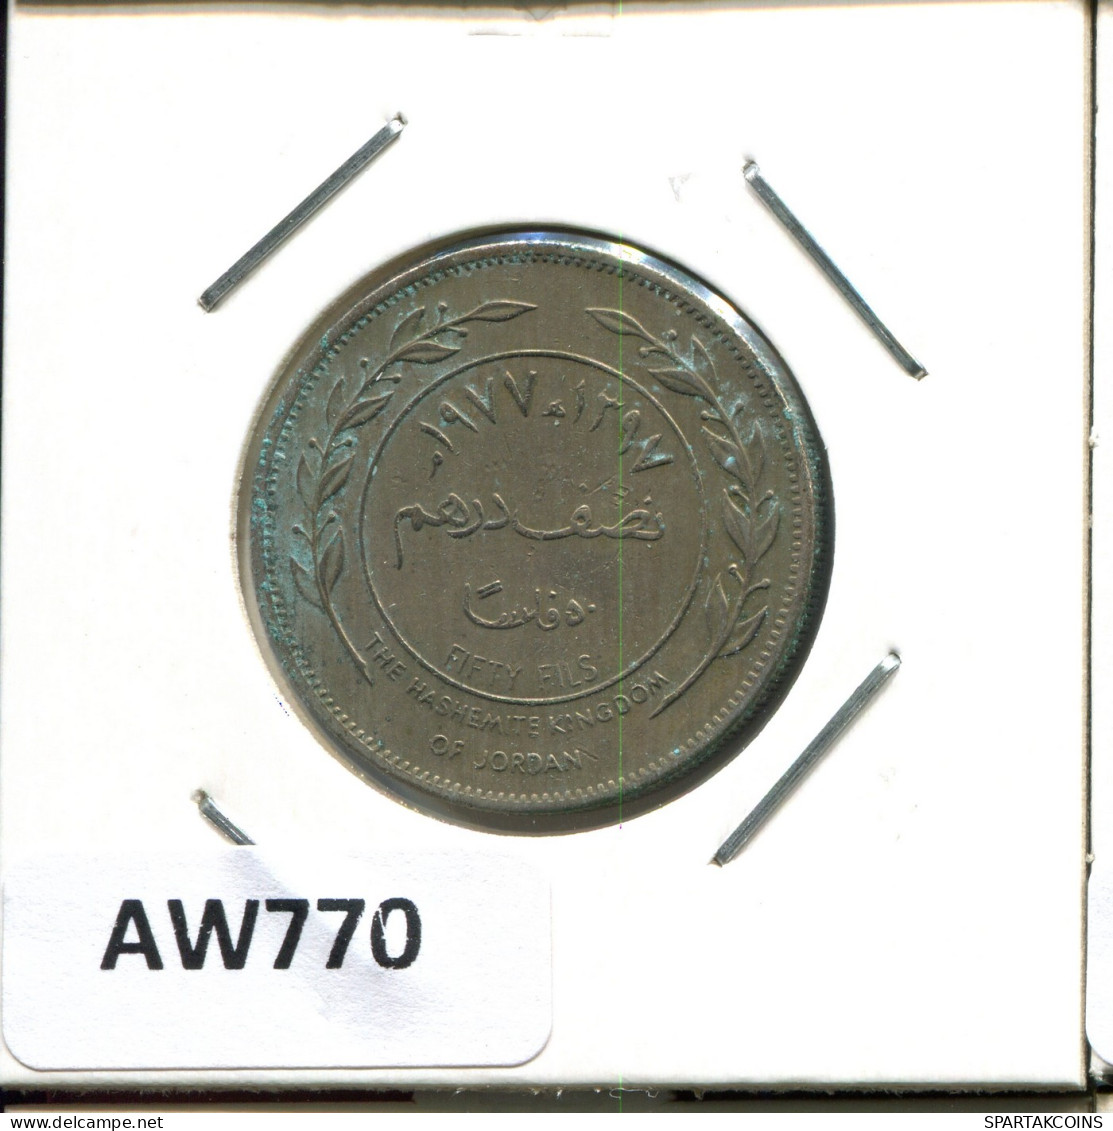 50 FILS 1977 JORDAN Islamic Coin #AW770.U - Jordanien